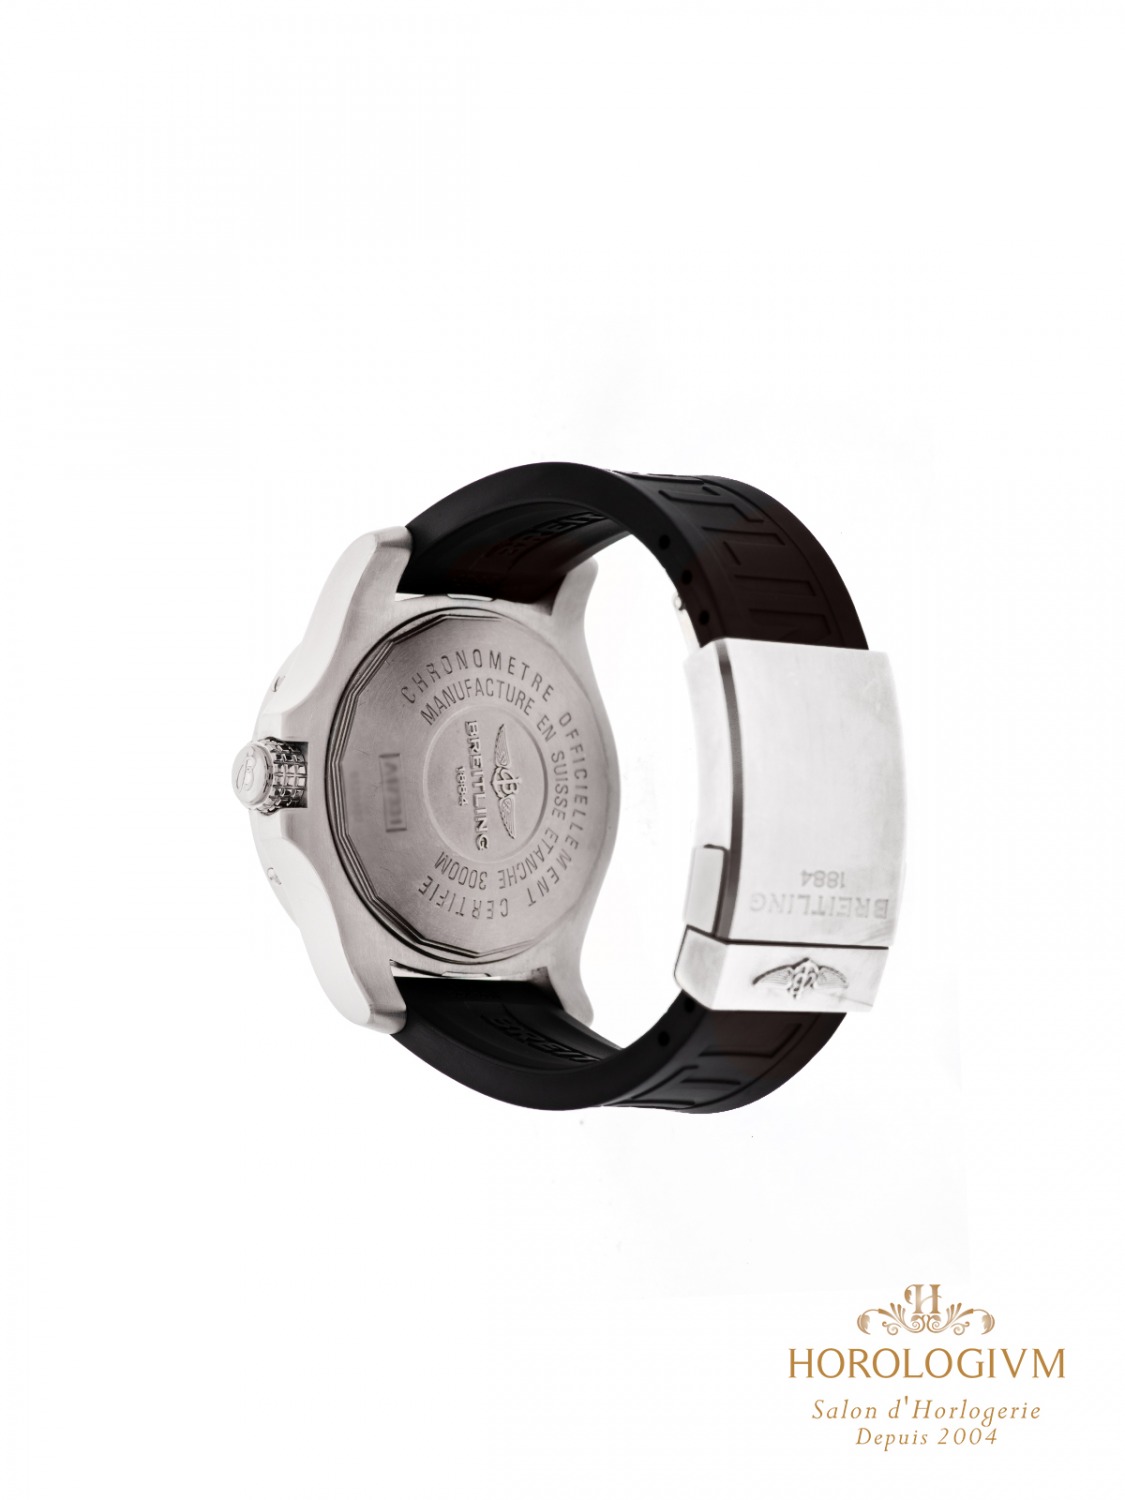 Breitling Avenger II Seawolf Ref. A17331 watch, silver